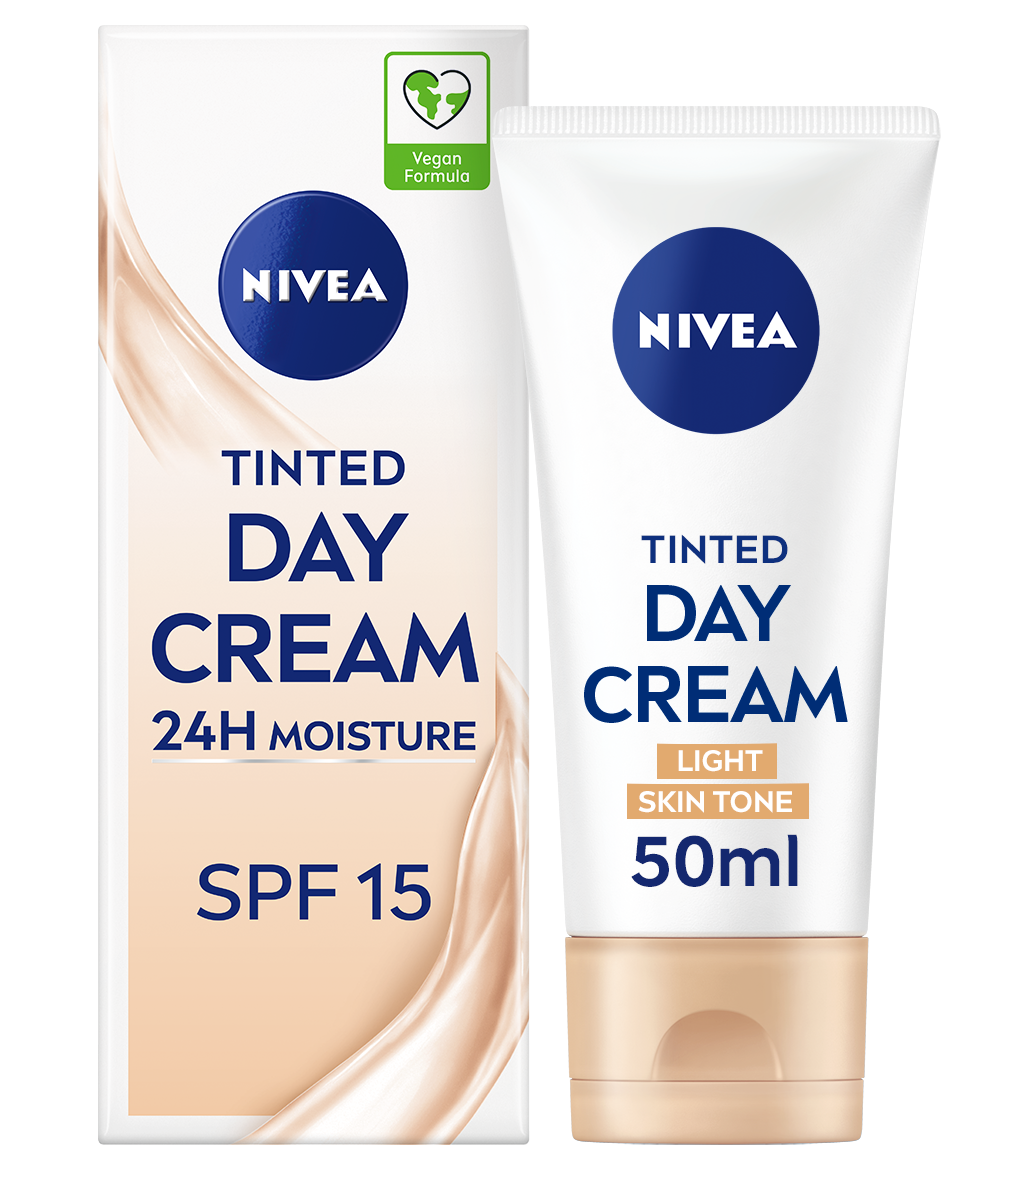 Best BB cream for mature skin : Nivea